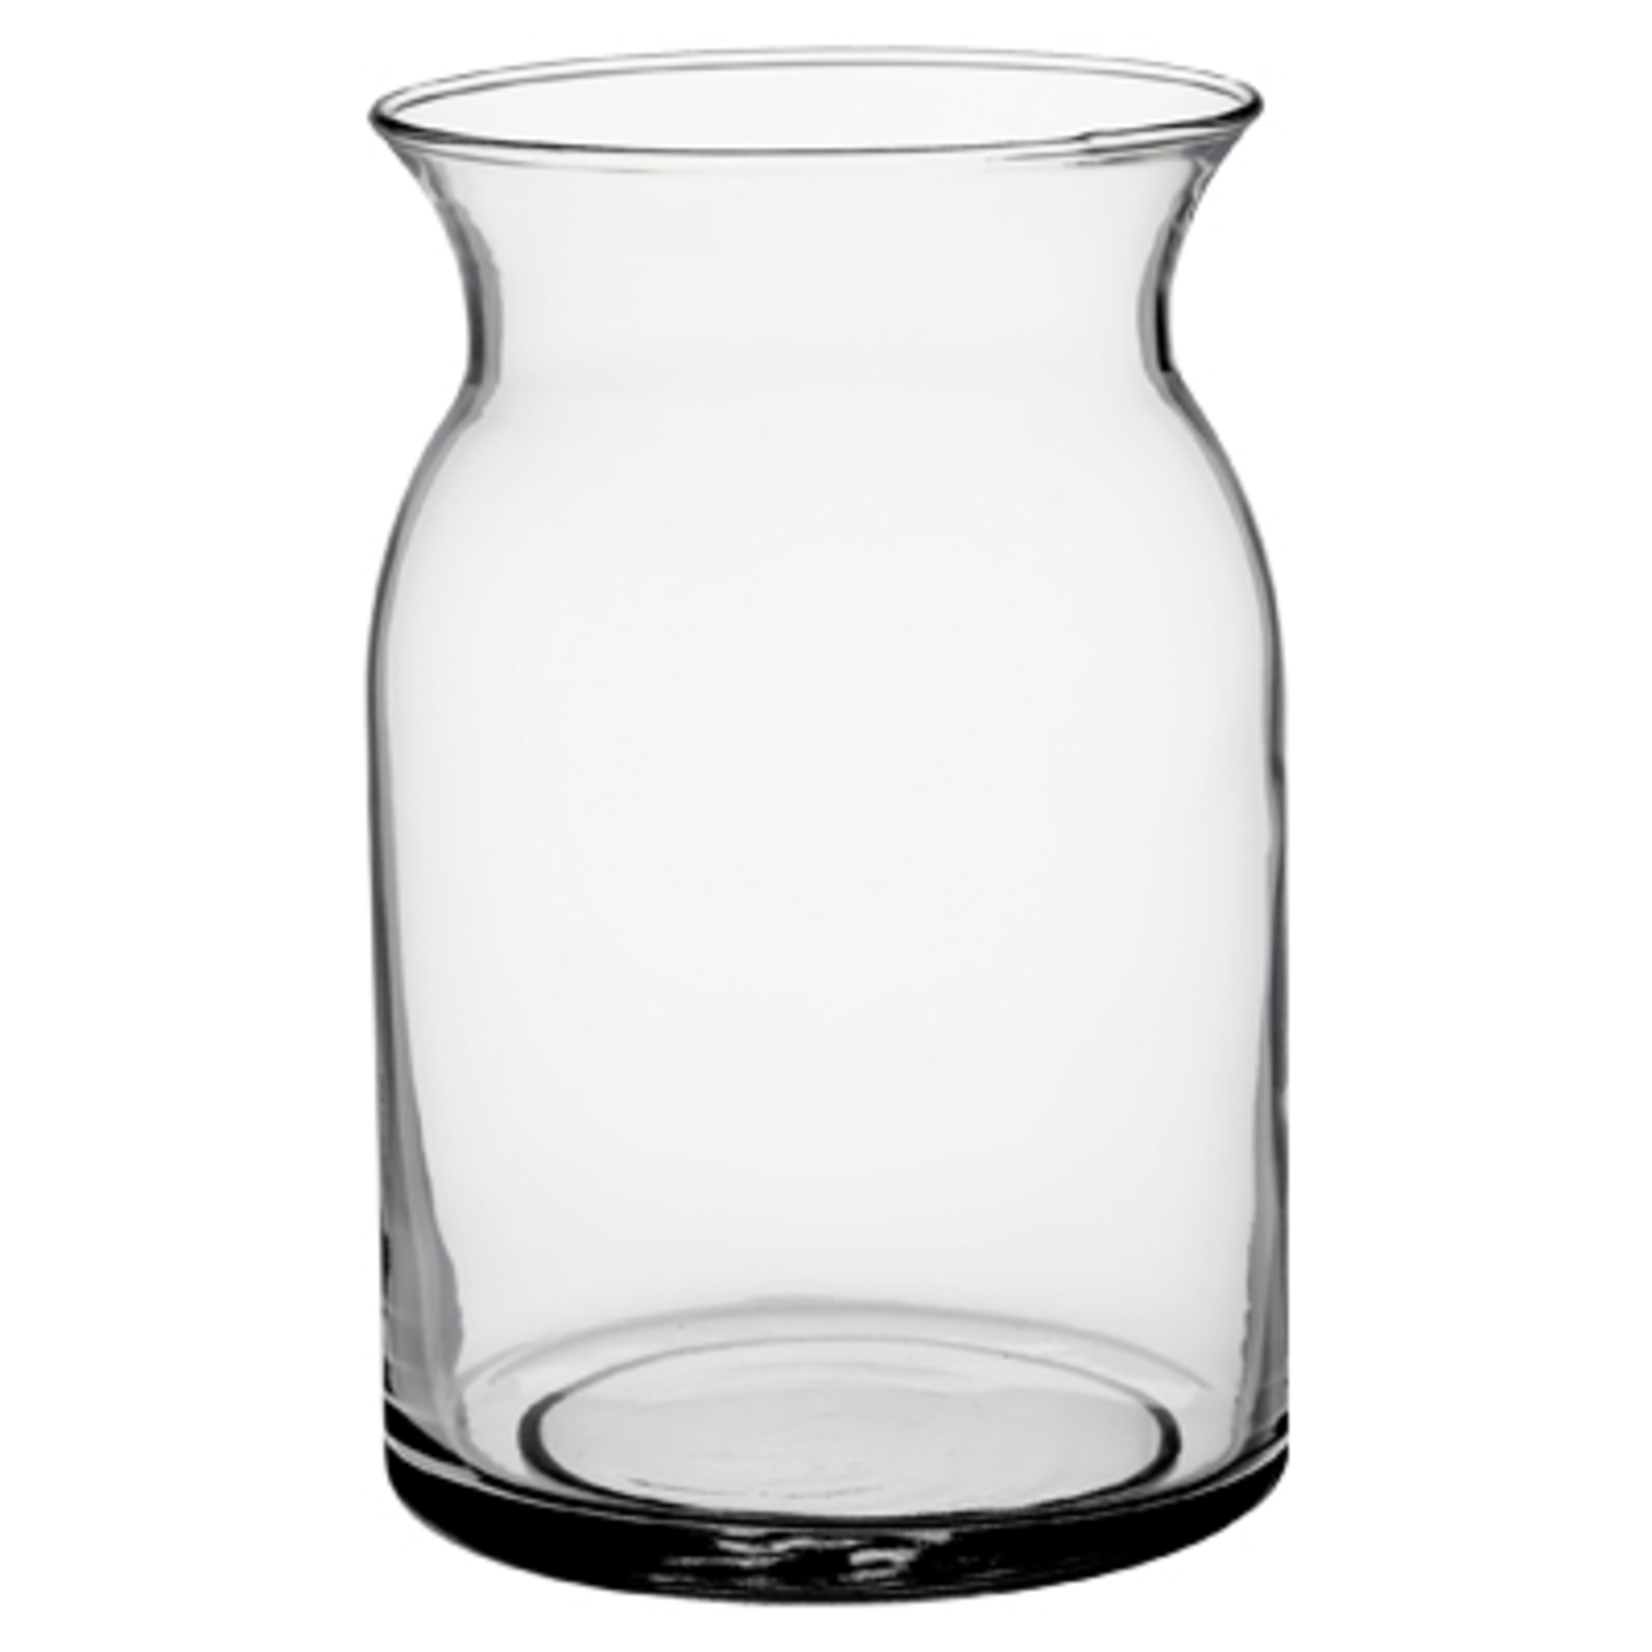 8" X 5" Milk Jug Vase - Crystal  Box can be marked 4048